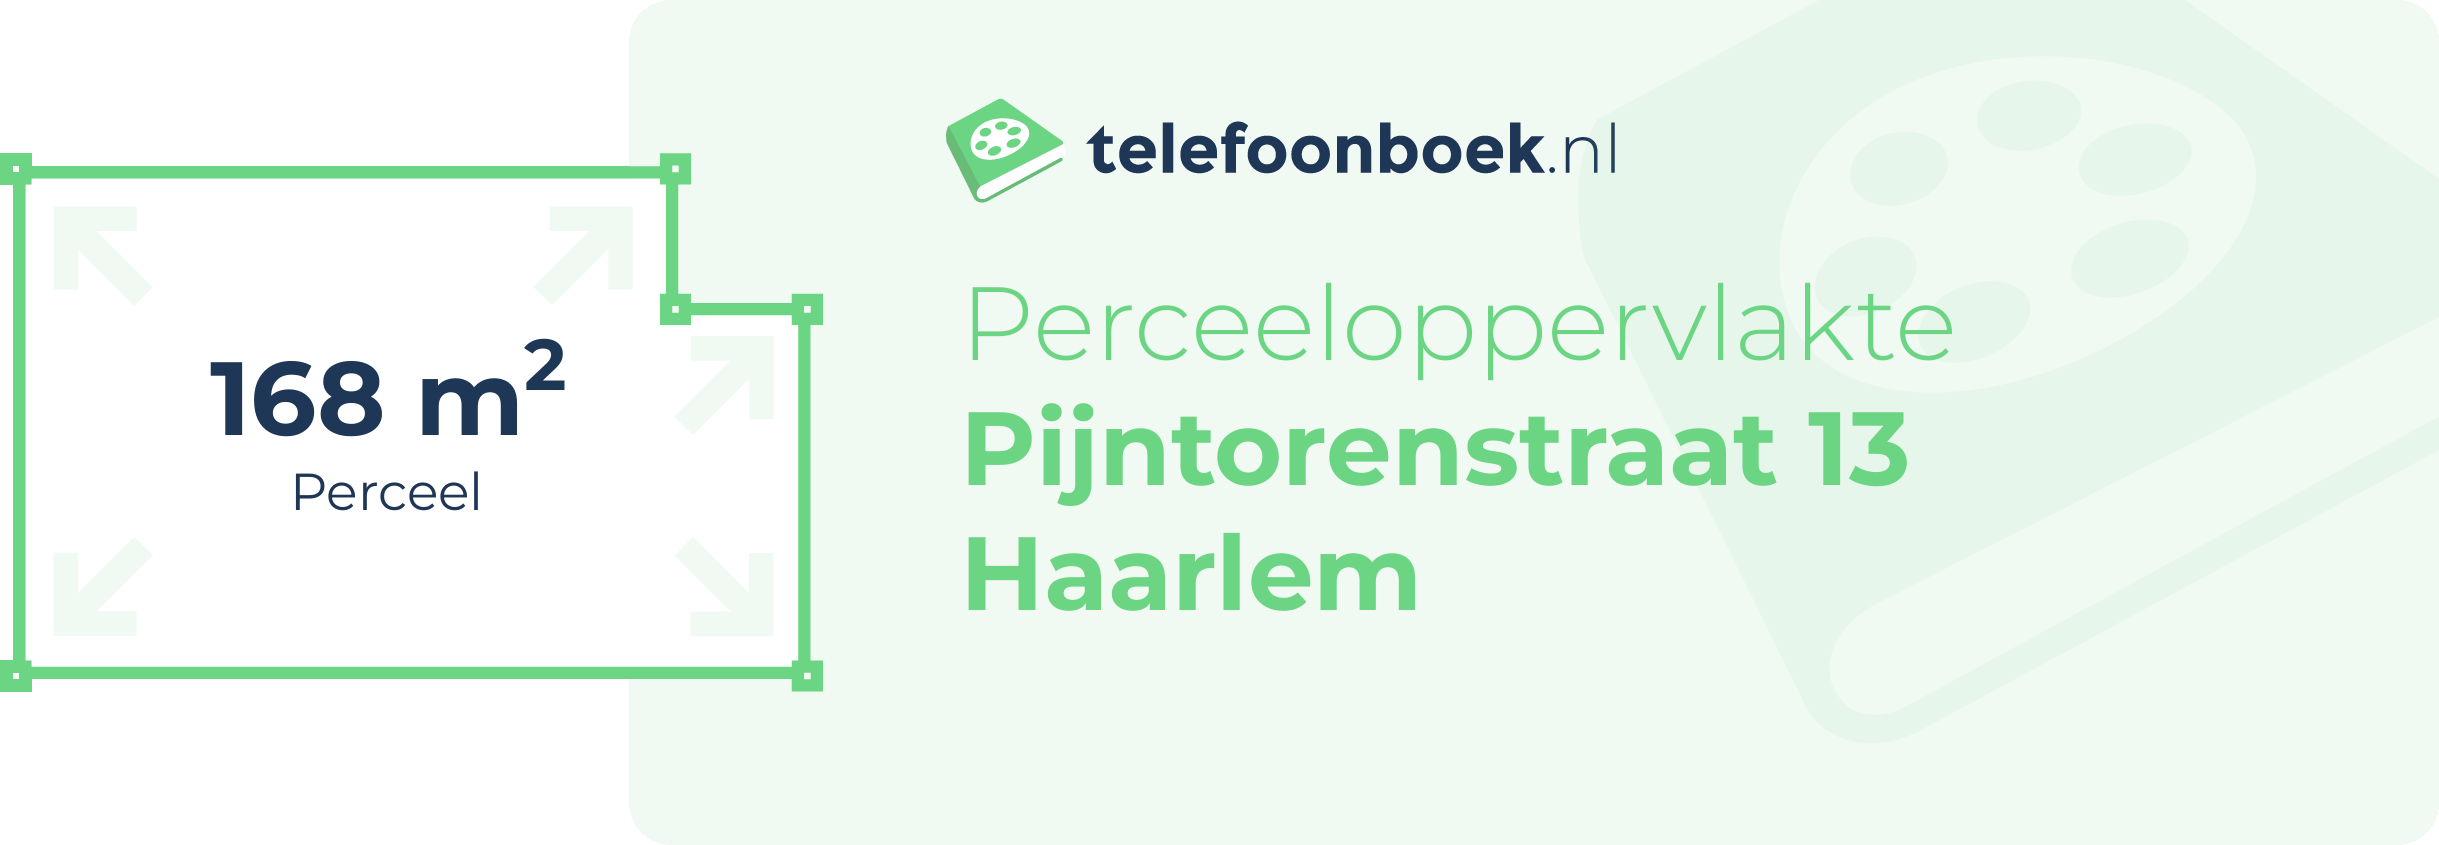 Perceeloppervlakte Pijntorenstraat 13 Haarlem